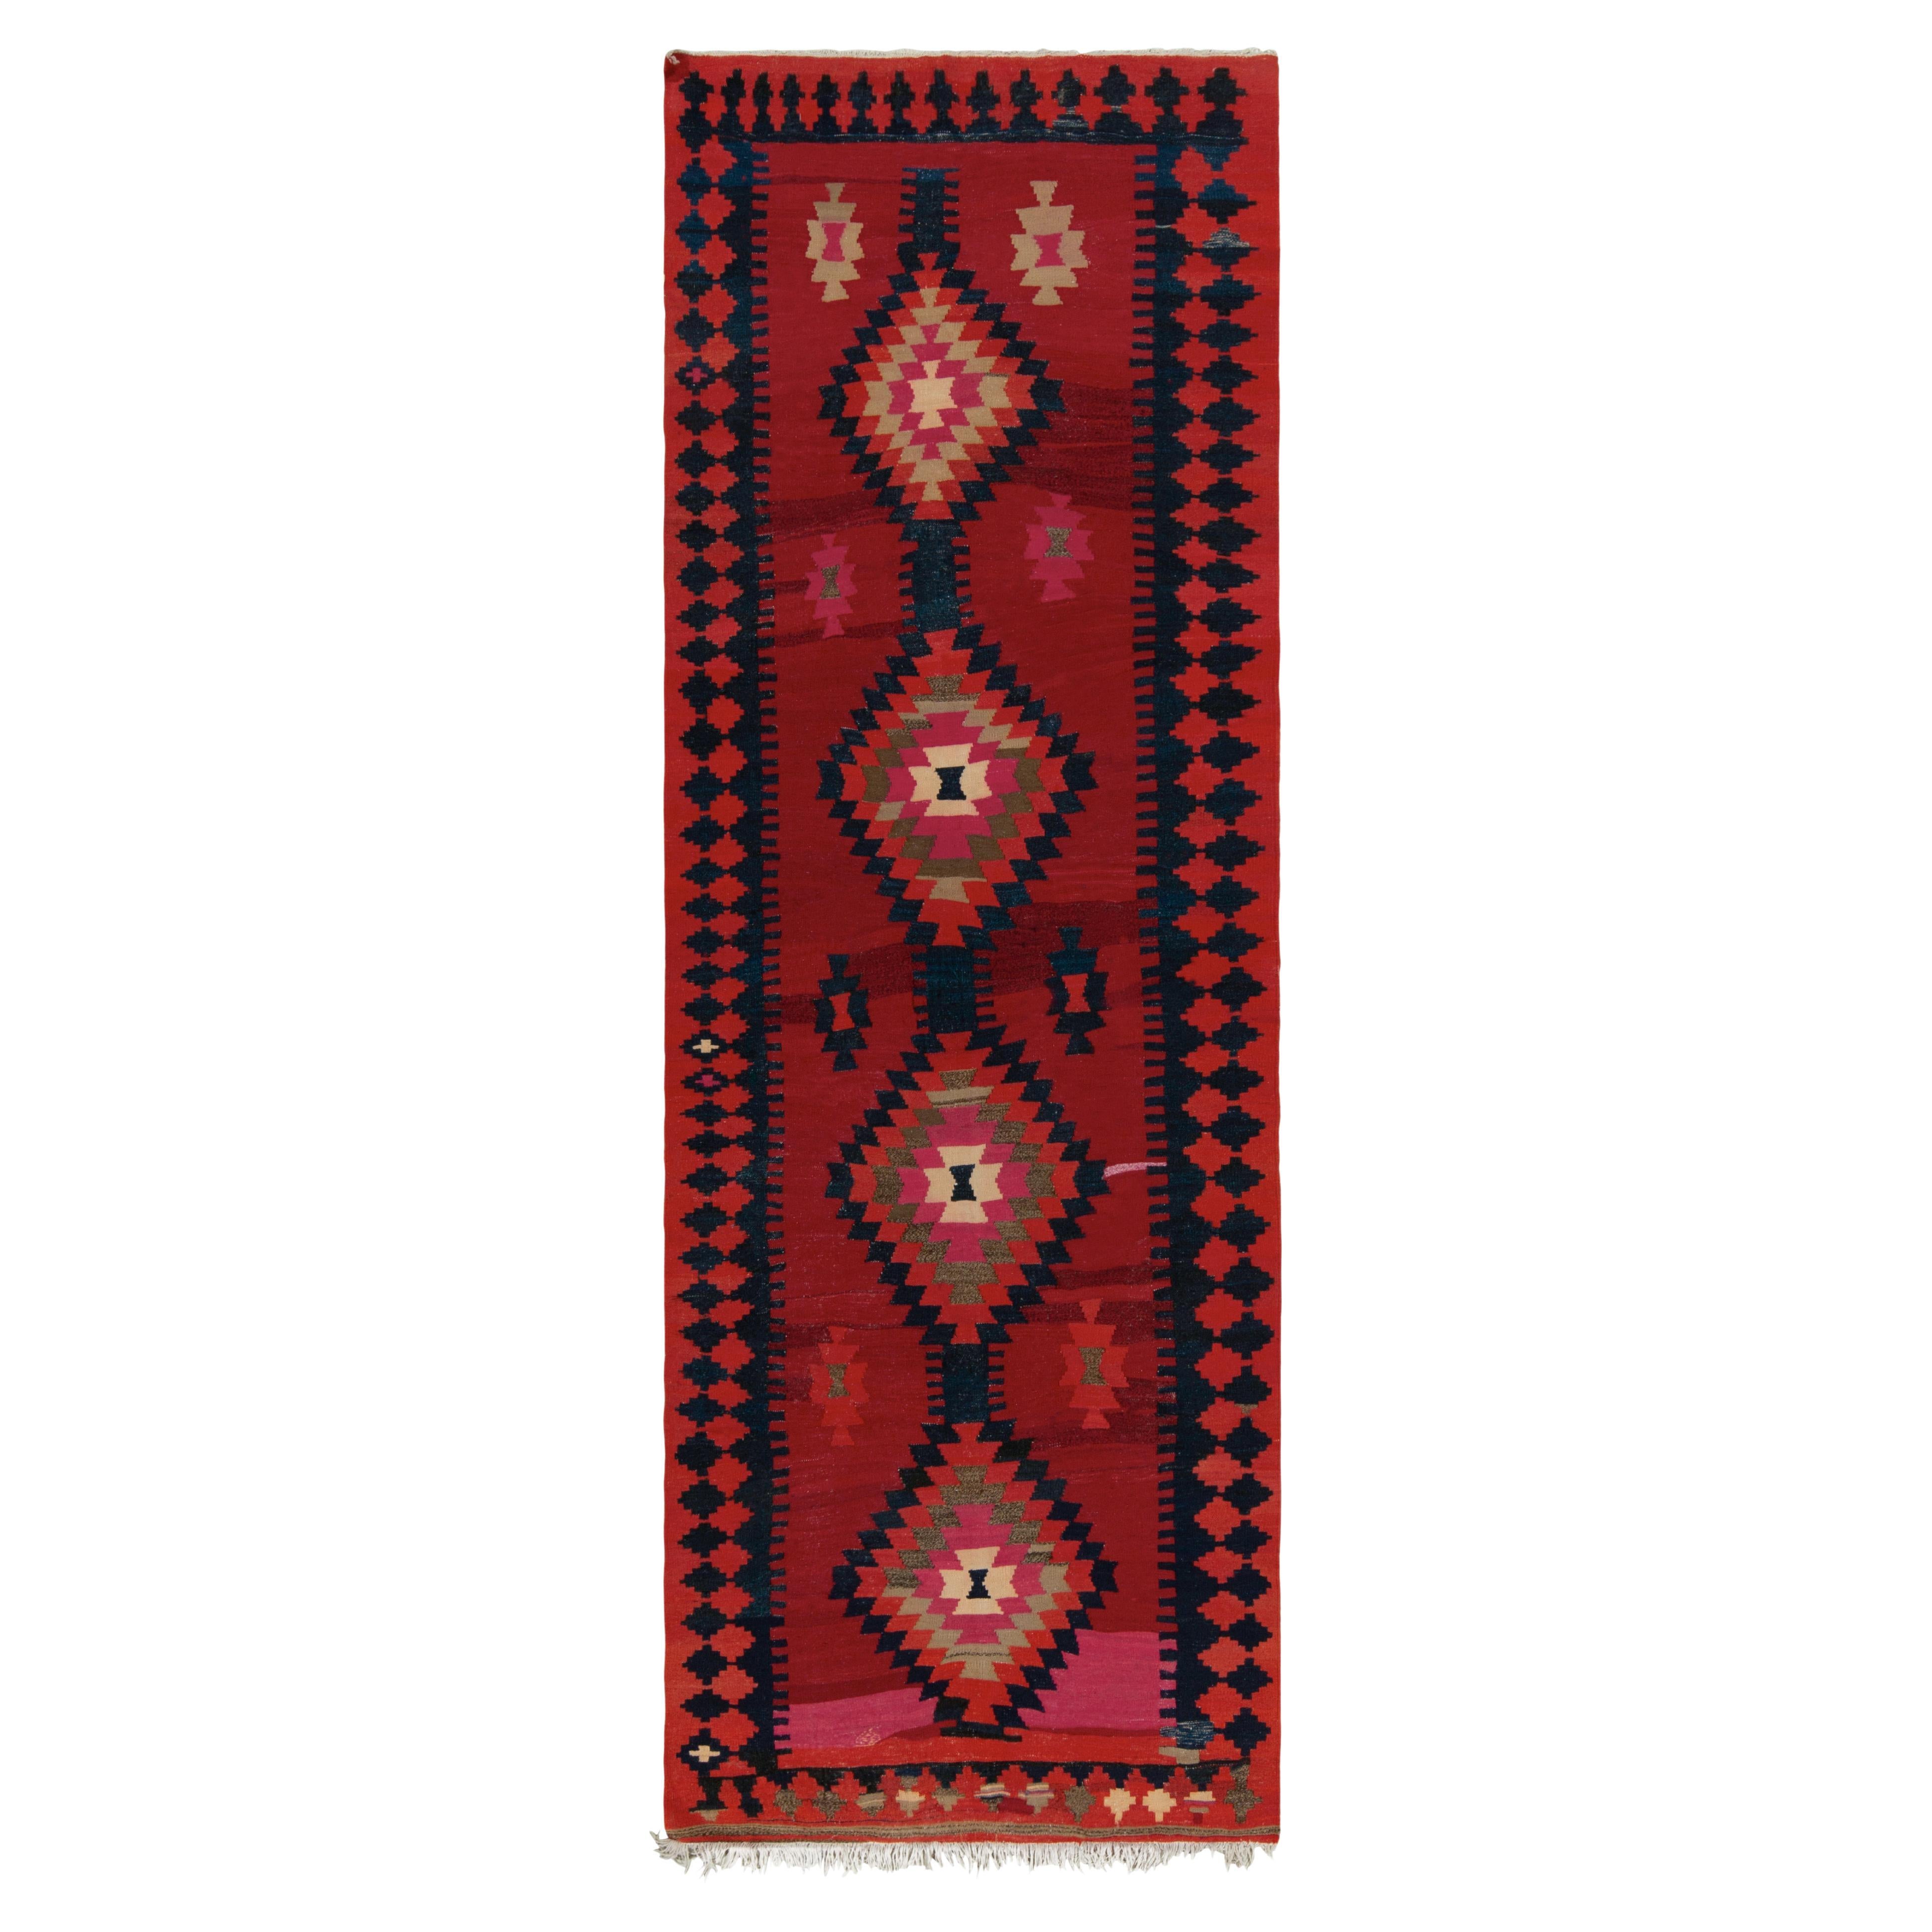 1910s Antique Persian Kilim Red & Pink Tribal Geometric Pattern by Rug & Kilim